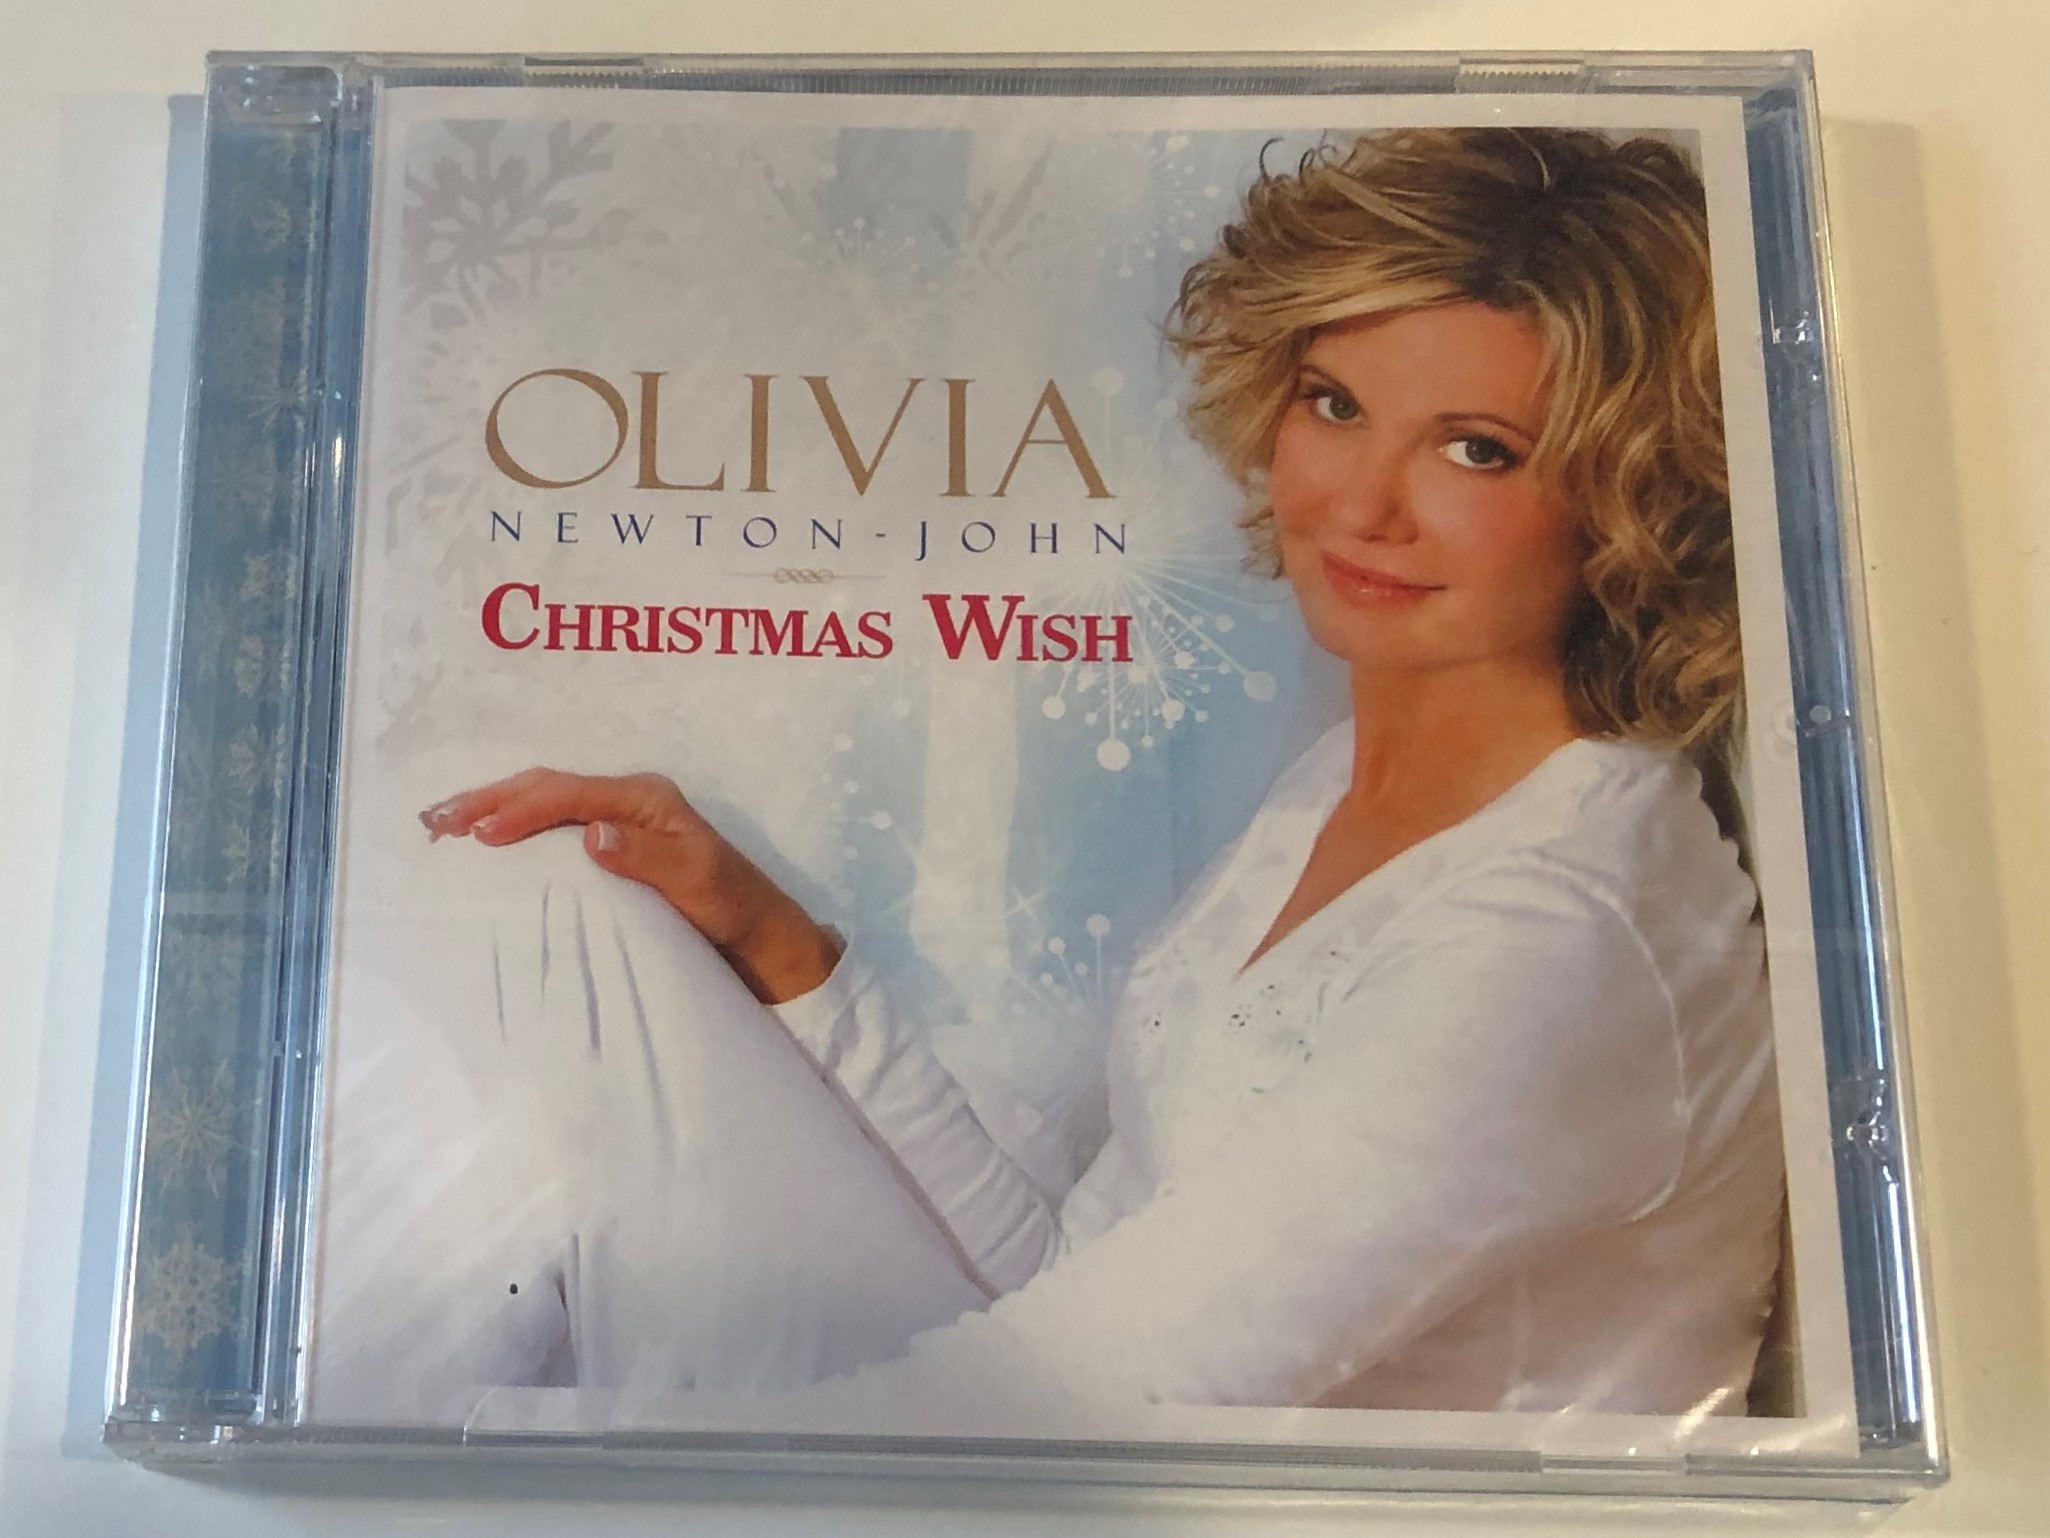 olivia-newton-john-christmas-wish-emi-audio-cd-2007-5099930900226-1-.jpg